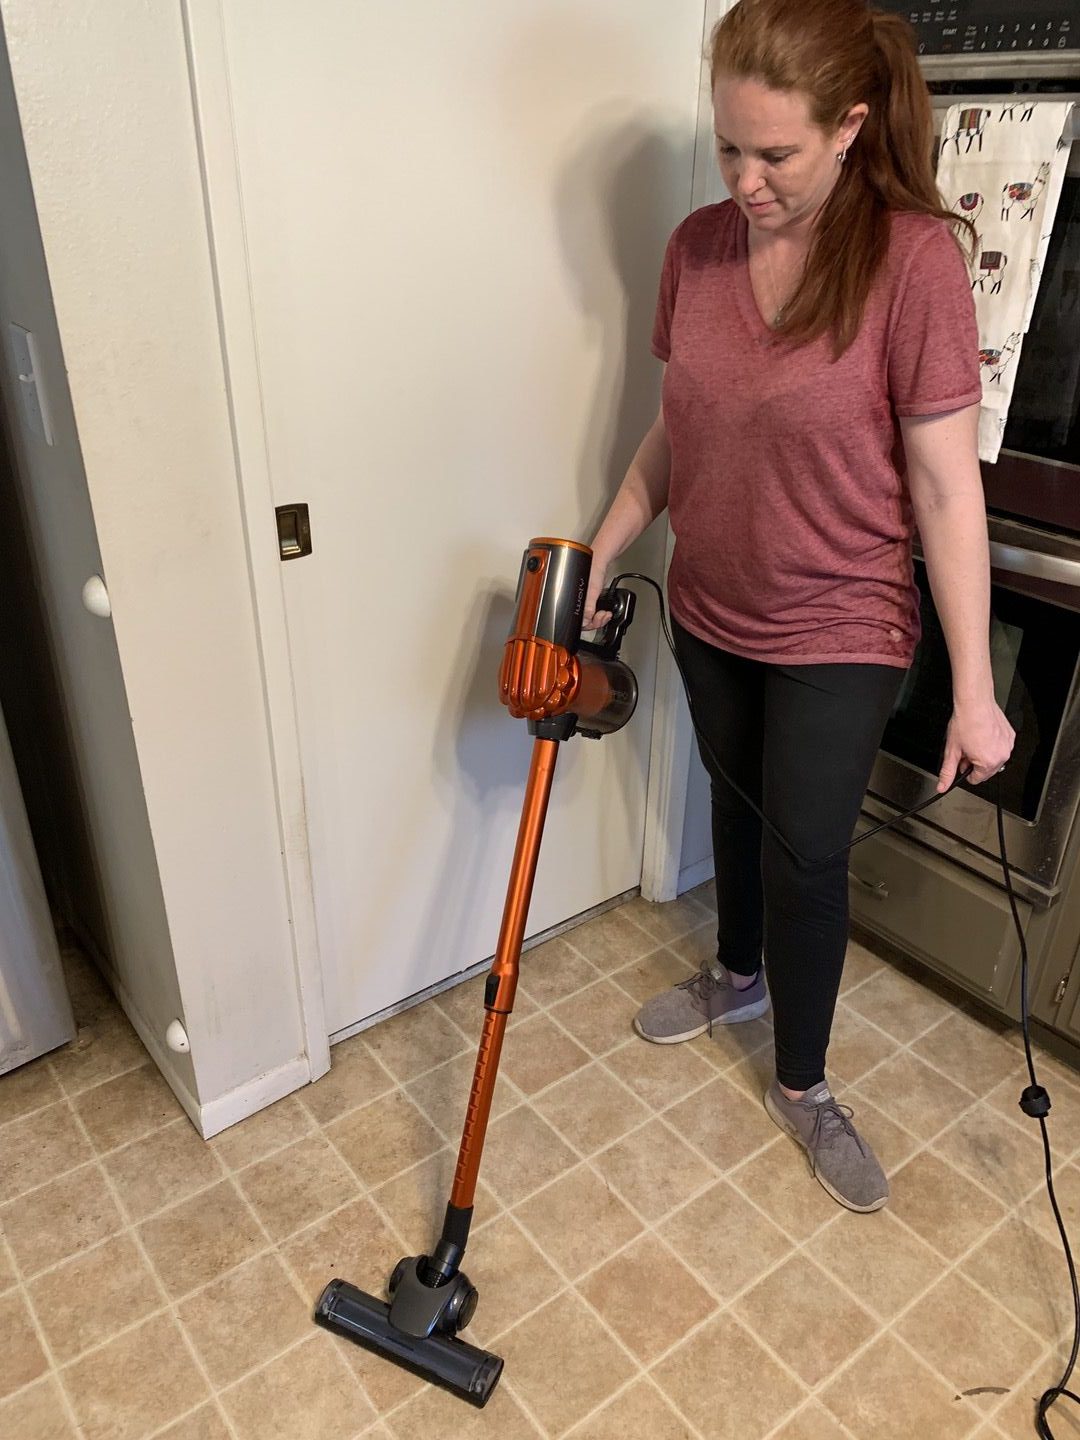 Woman vacuuming kitchen floor